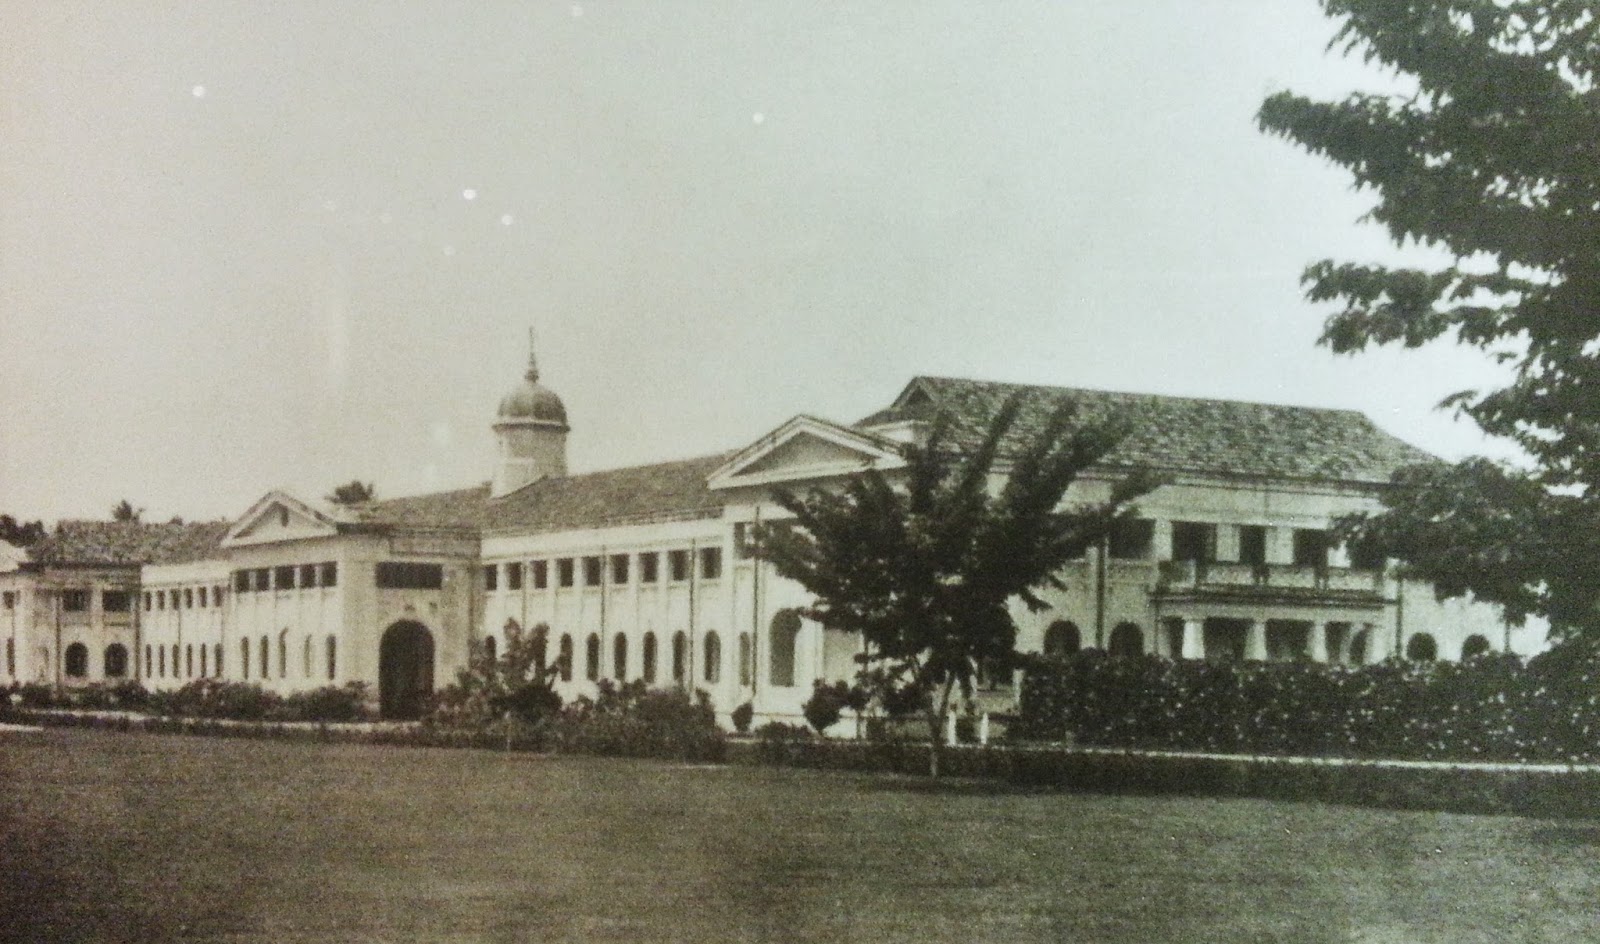 Penang Free School at Green Lane, Penang in 1932 | The First 100 years of Penang Free School blog